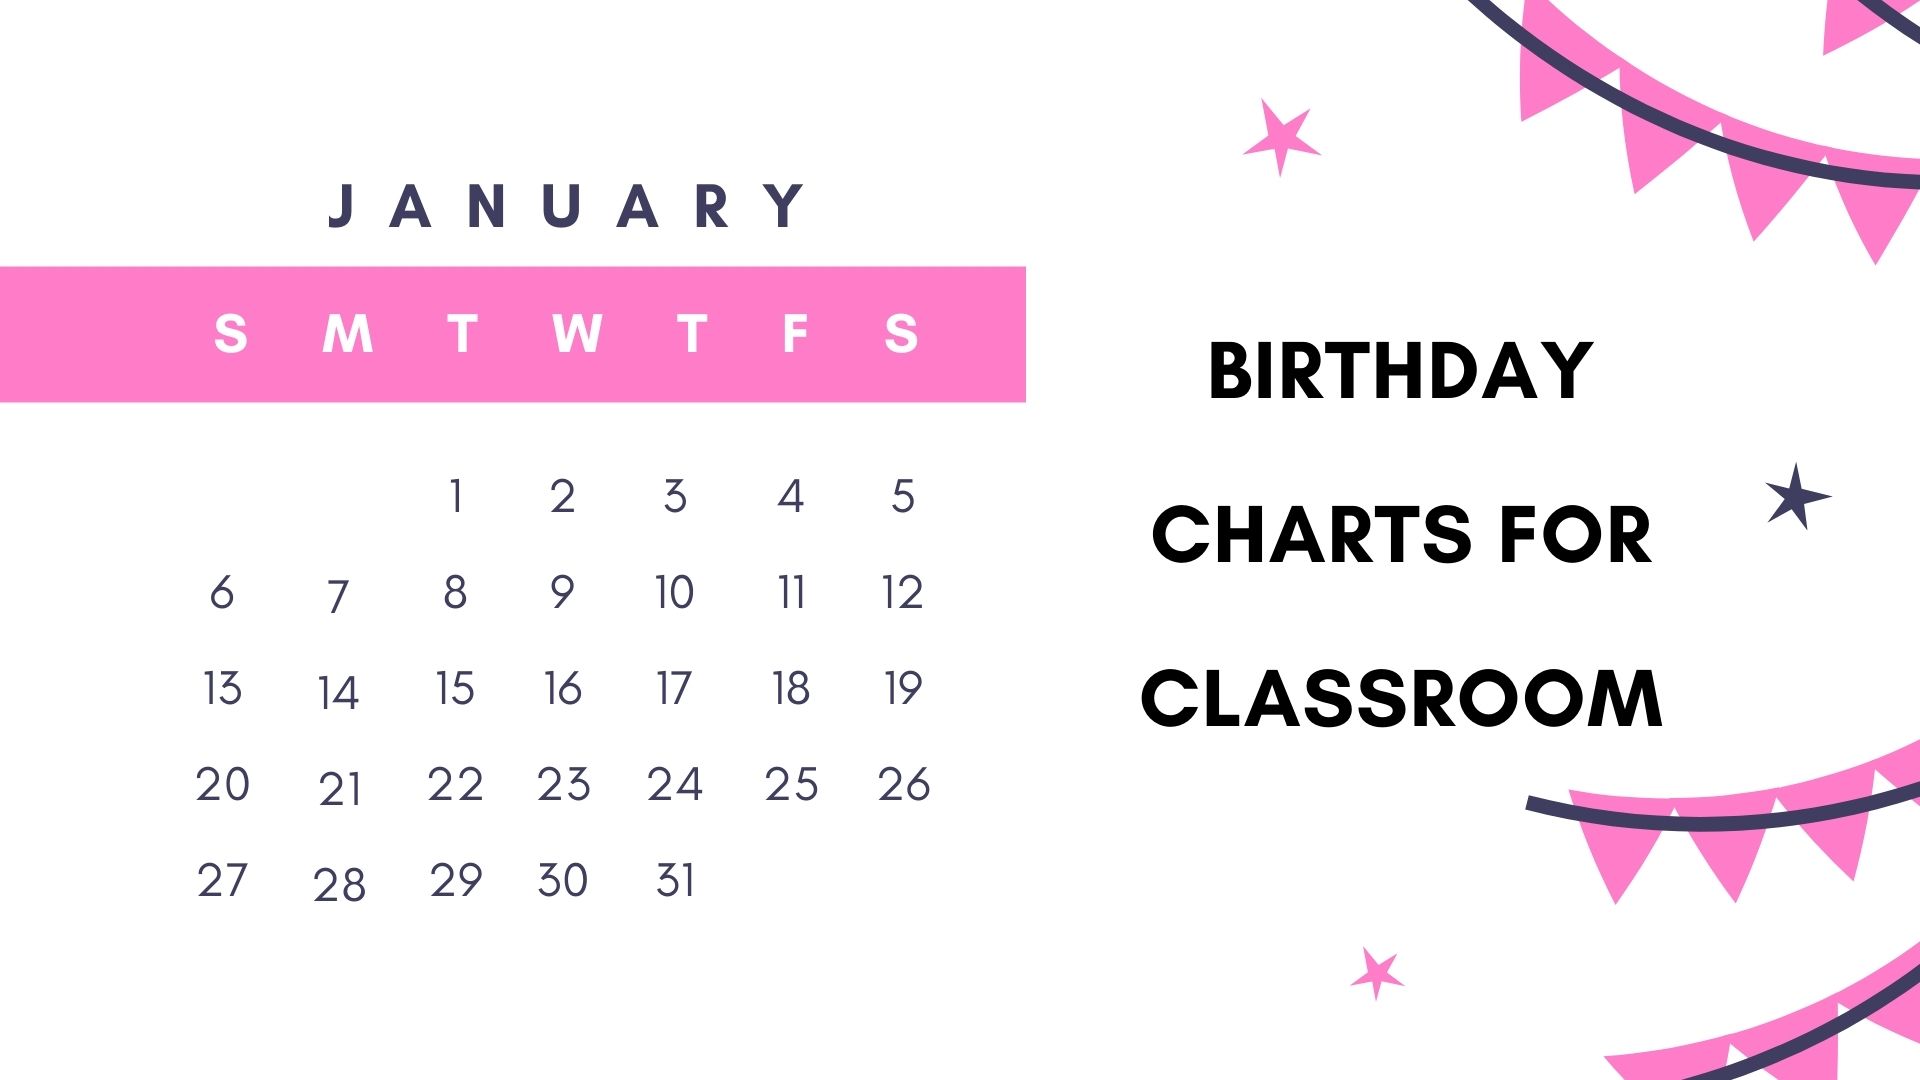 Birthday Charts for Classroom